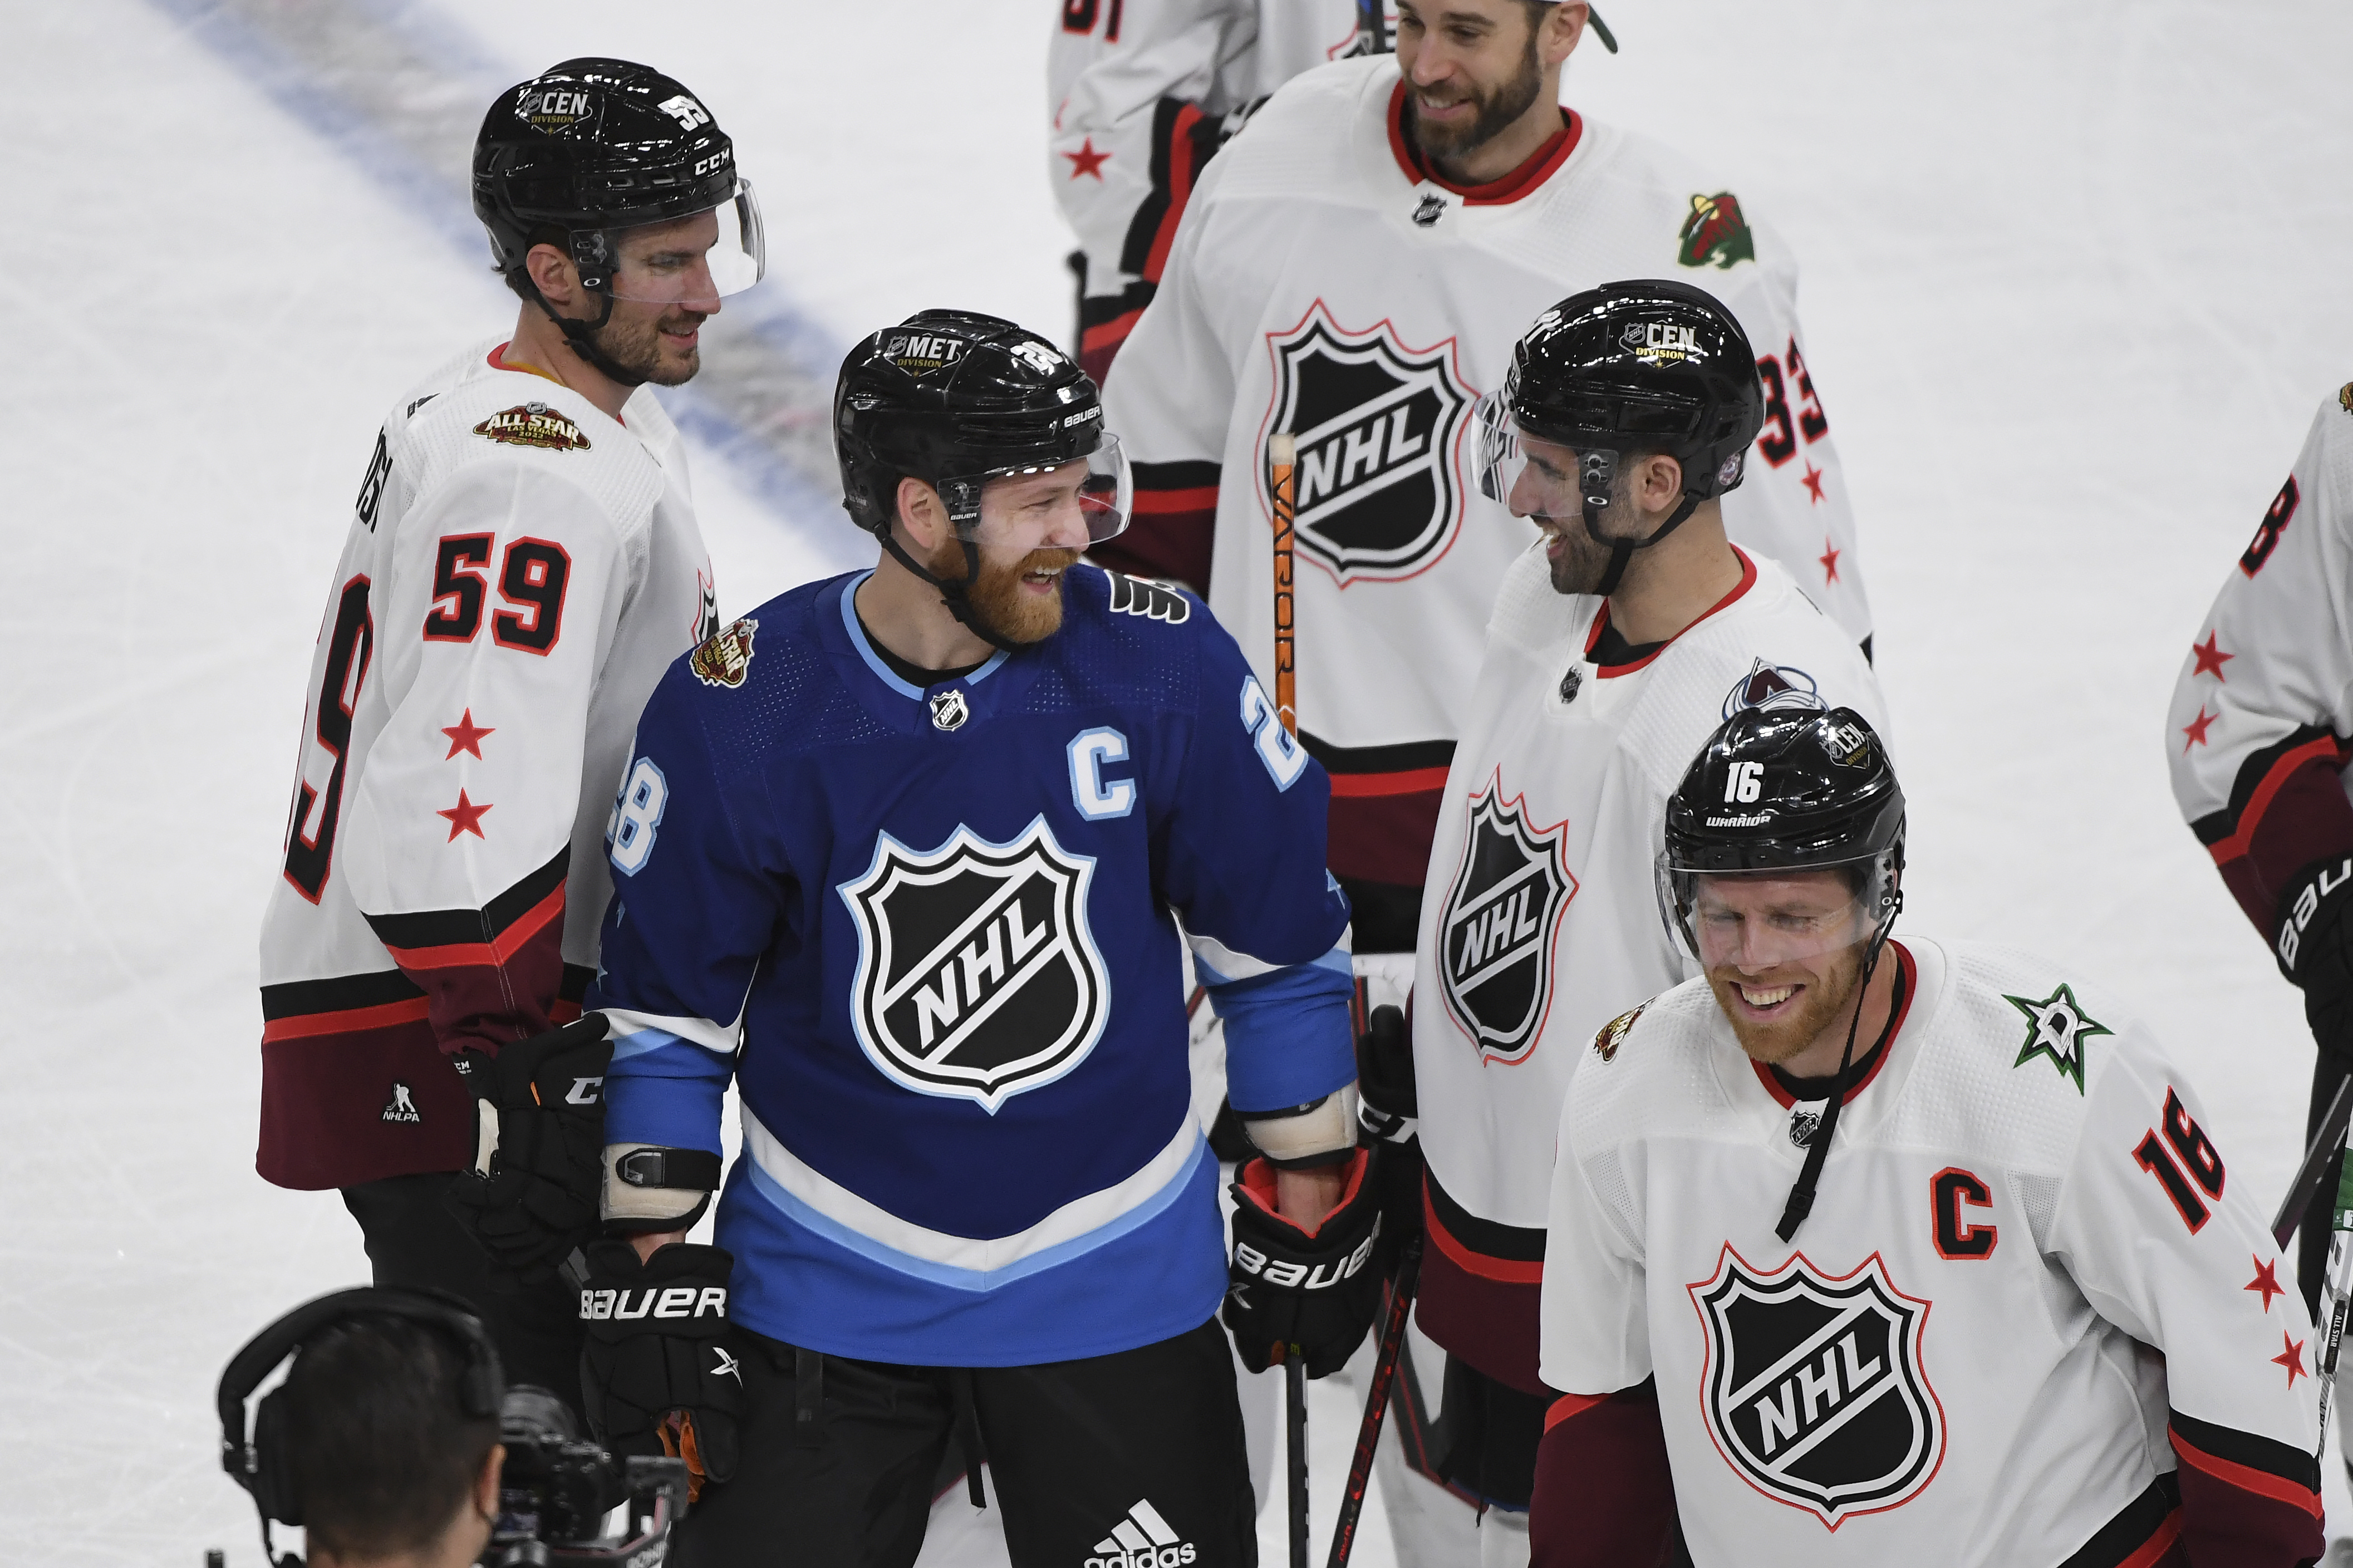 Giroux named MVP, Metropolitan team wins NHL All-Star Game - Las